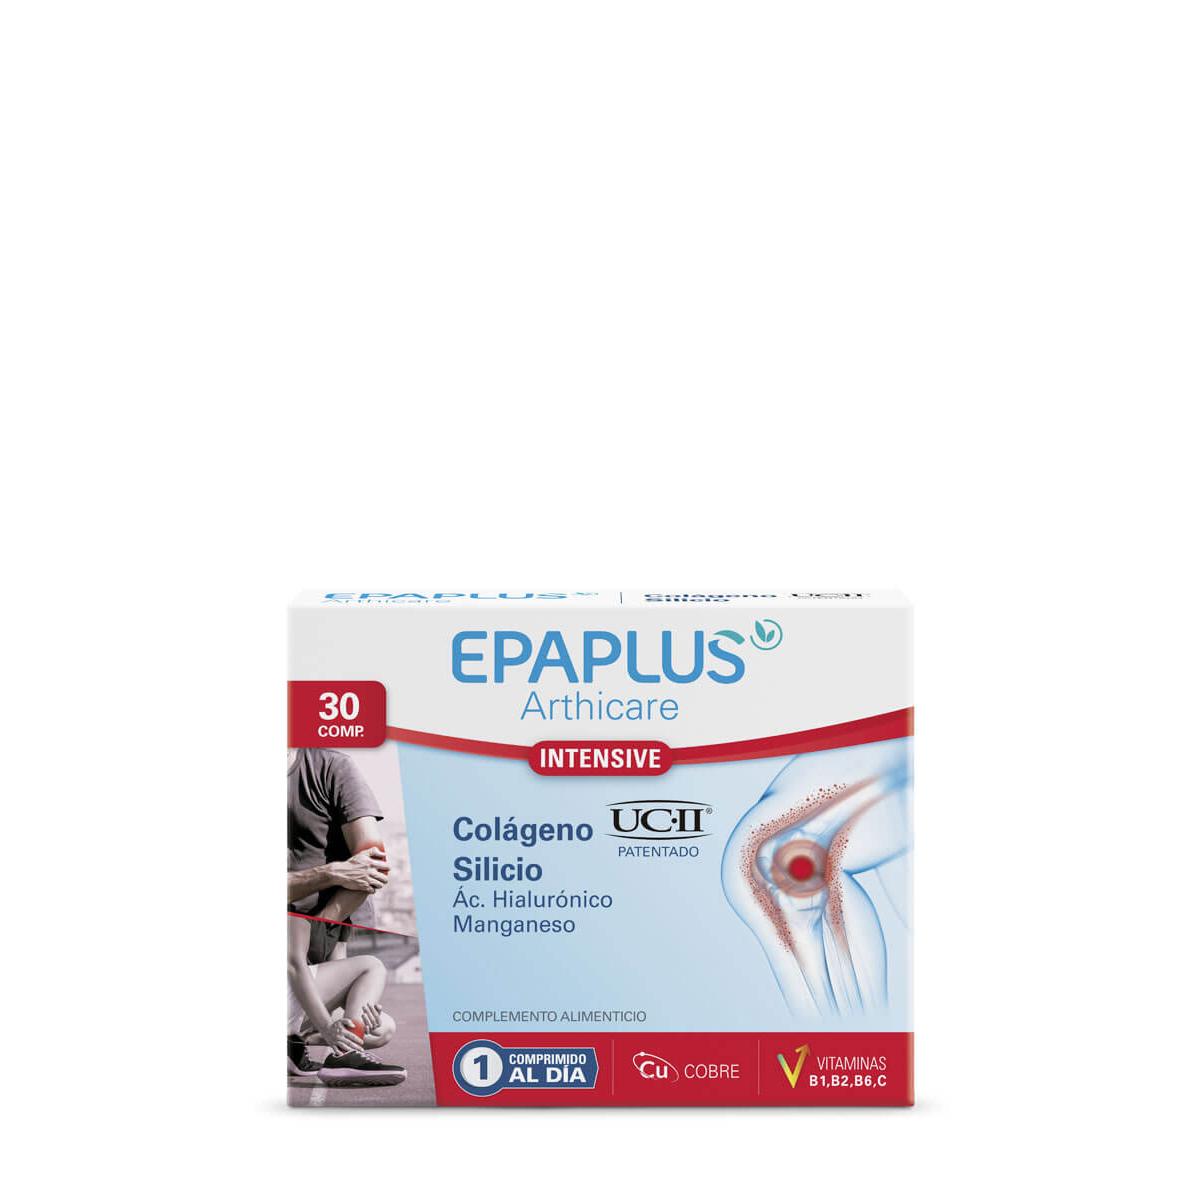 Epaplus - Epaplus arthicare intensive colágeno + silicio 30 comprimidos